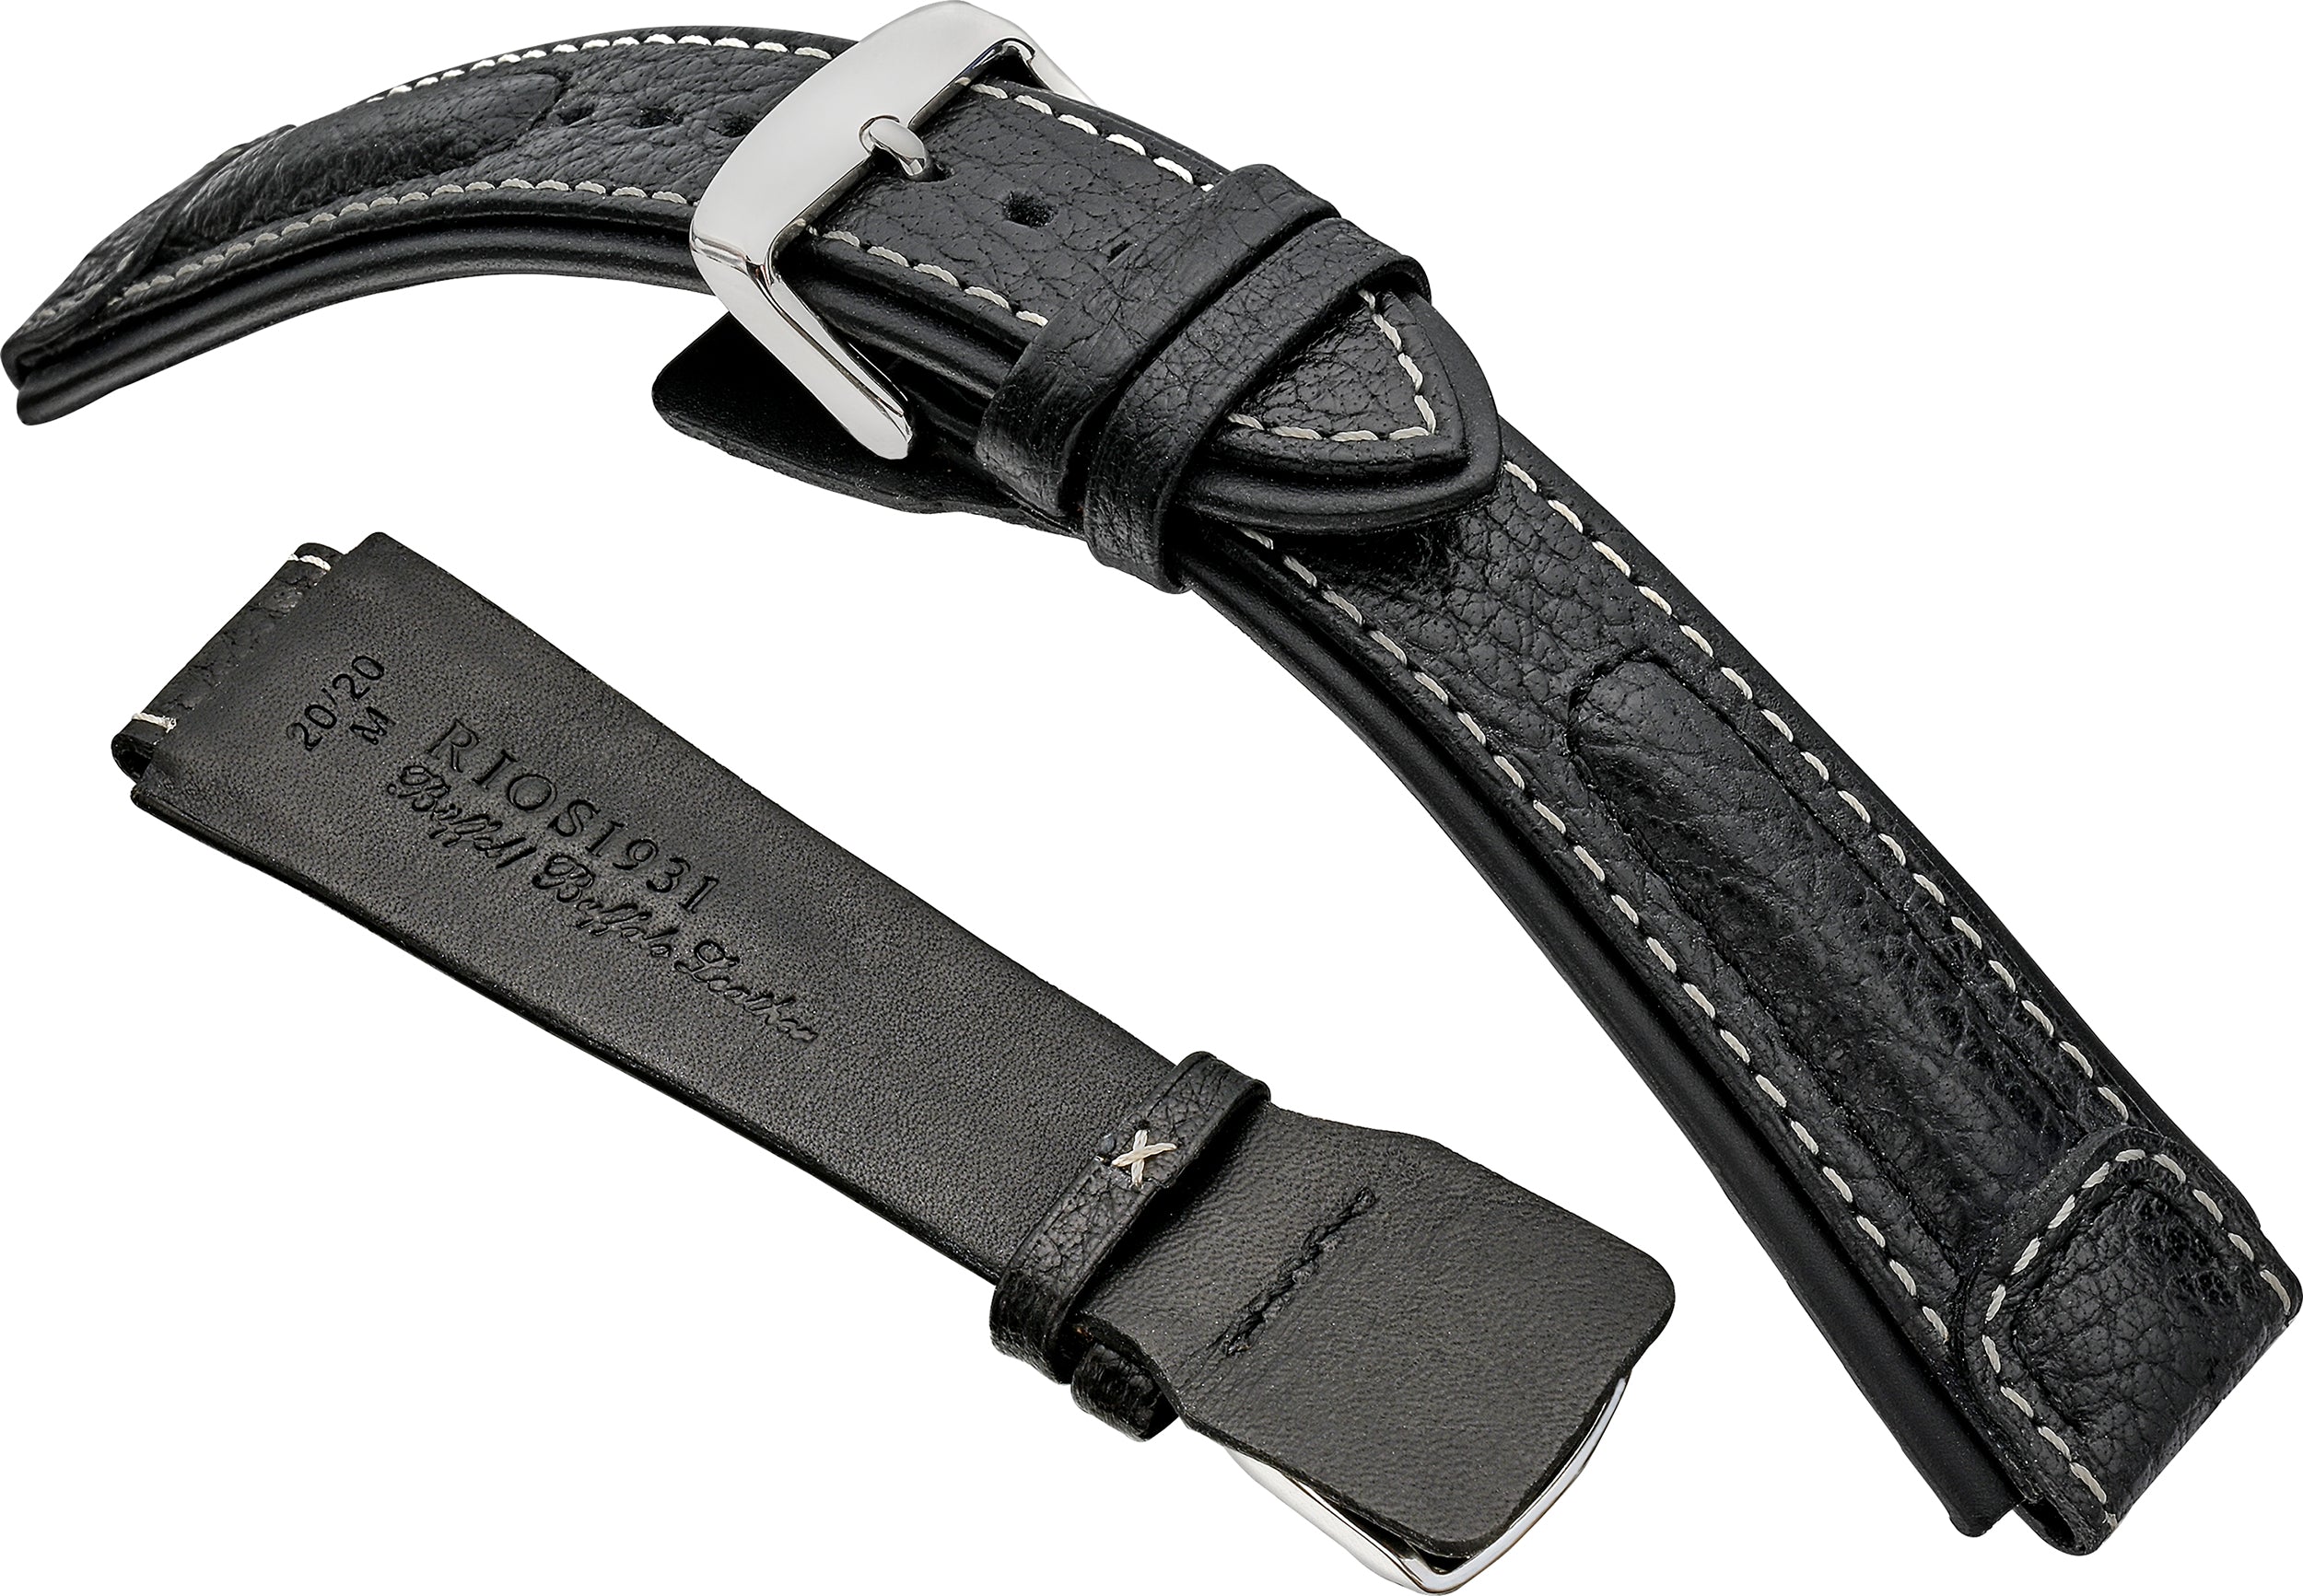 R207 PERFORMANCE watch strap